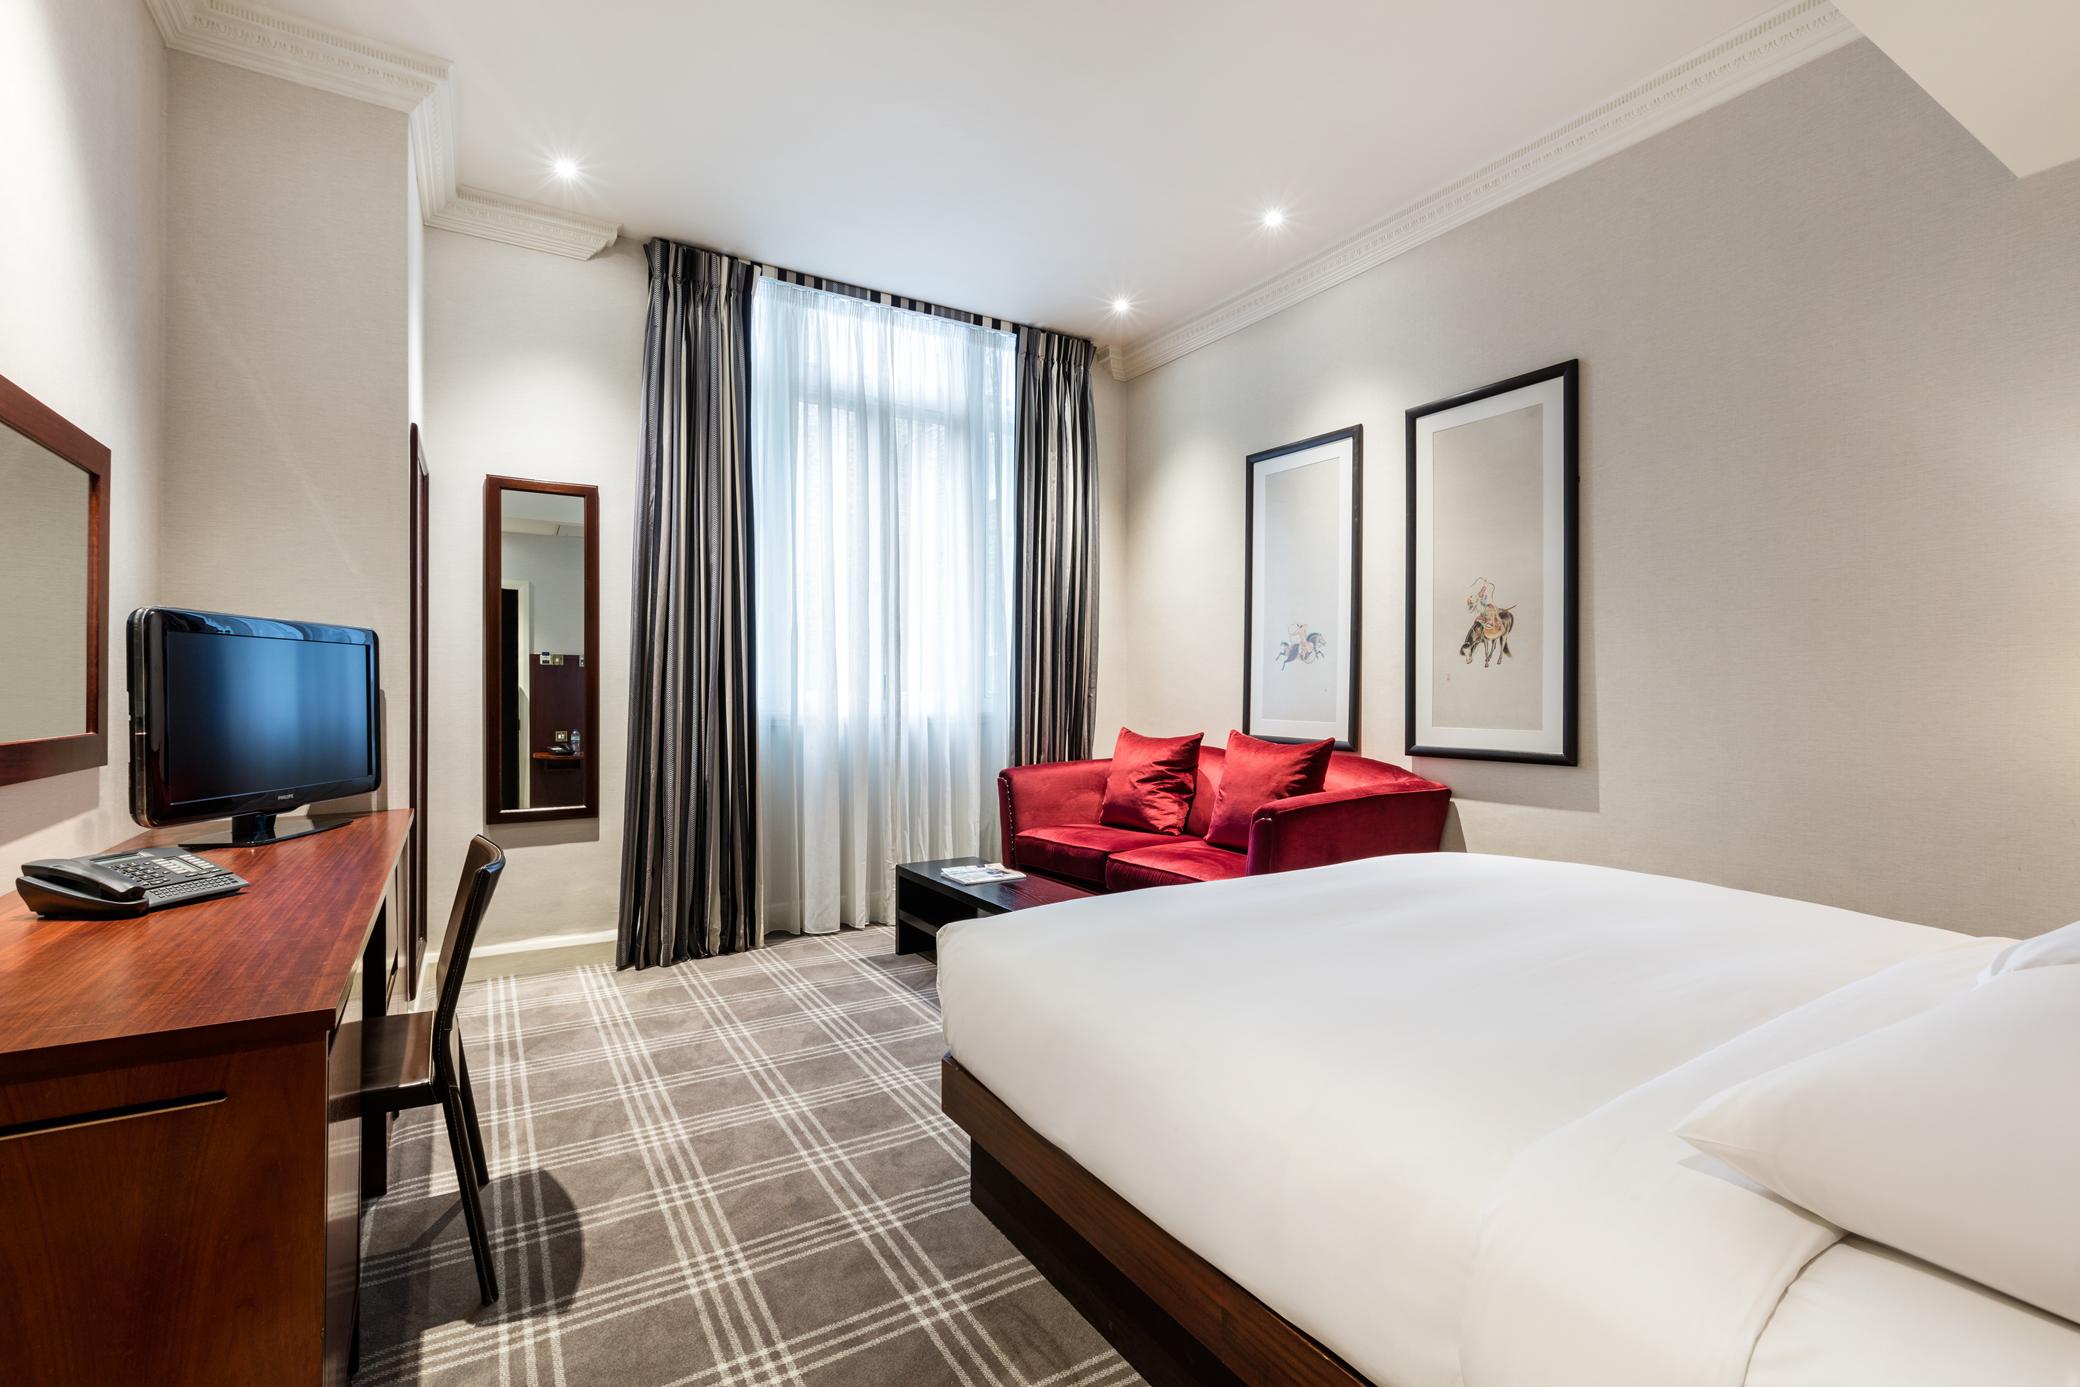 Premium Room Radisson Blu Edwardian Vanderbilt Hotel, London London 020 7761 9000